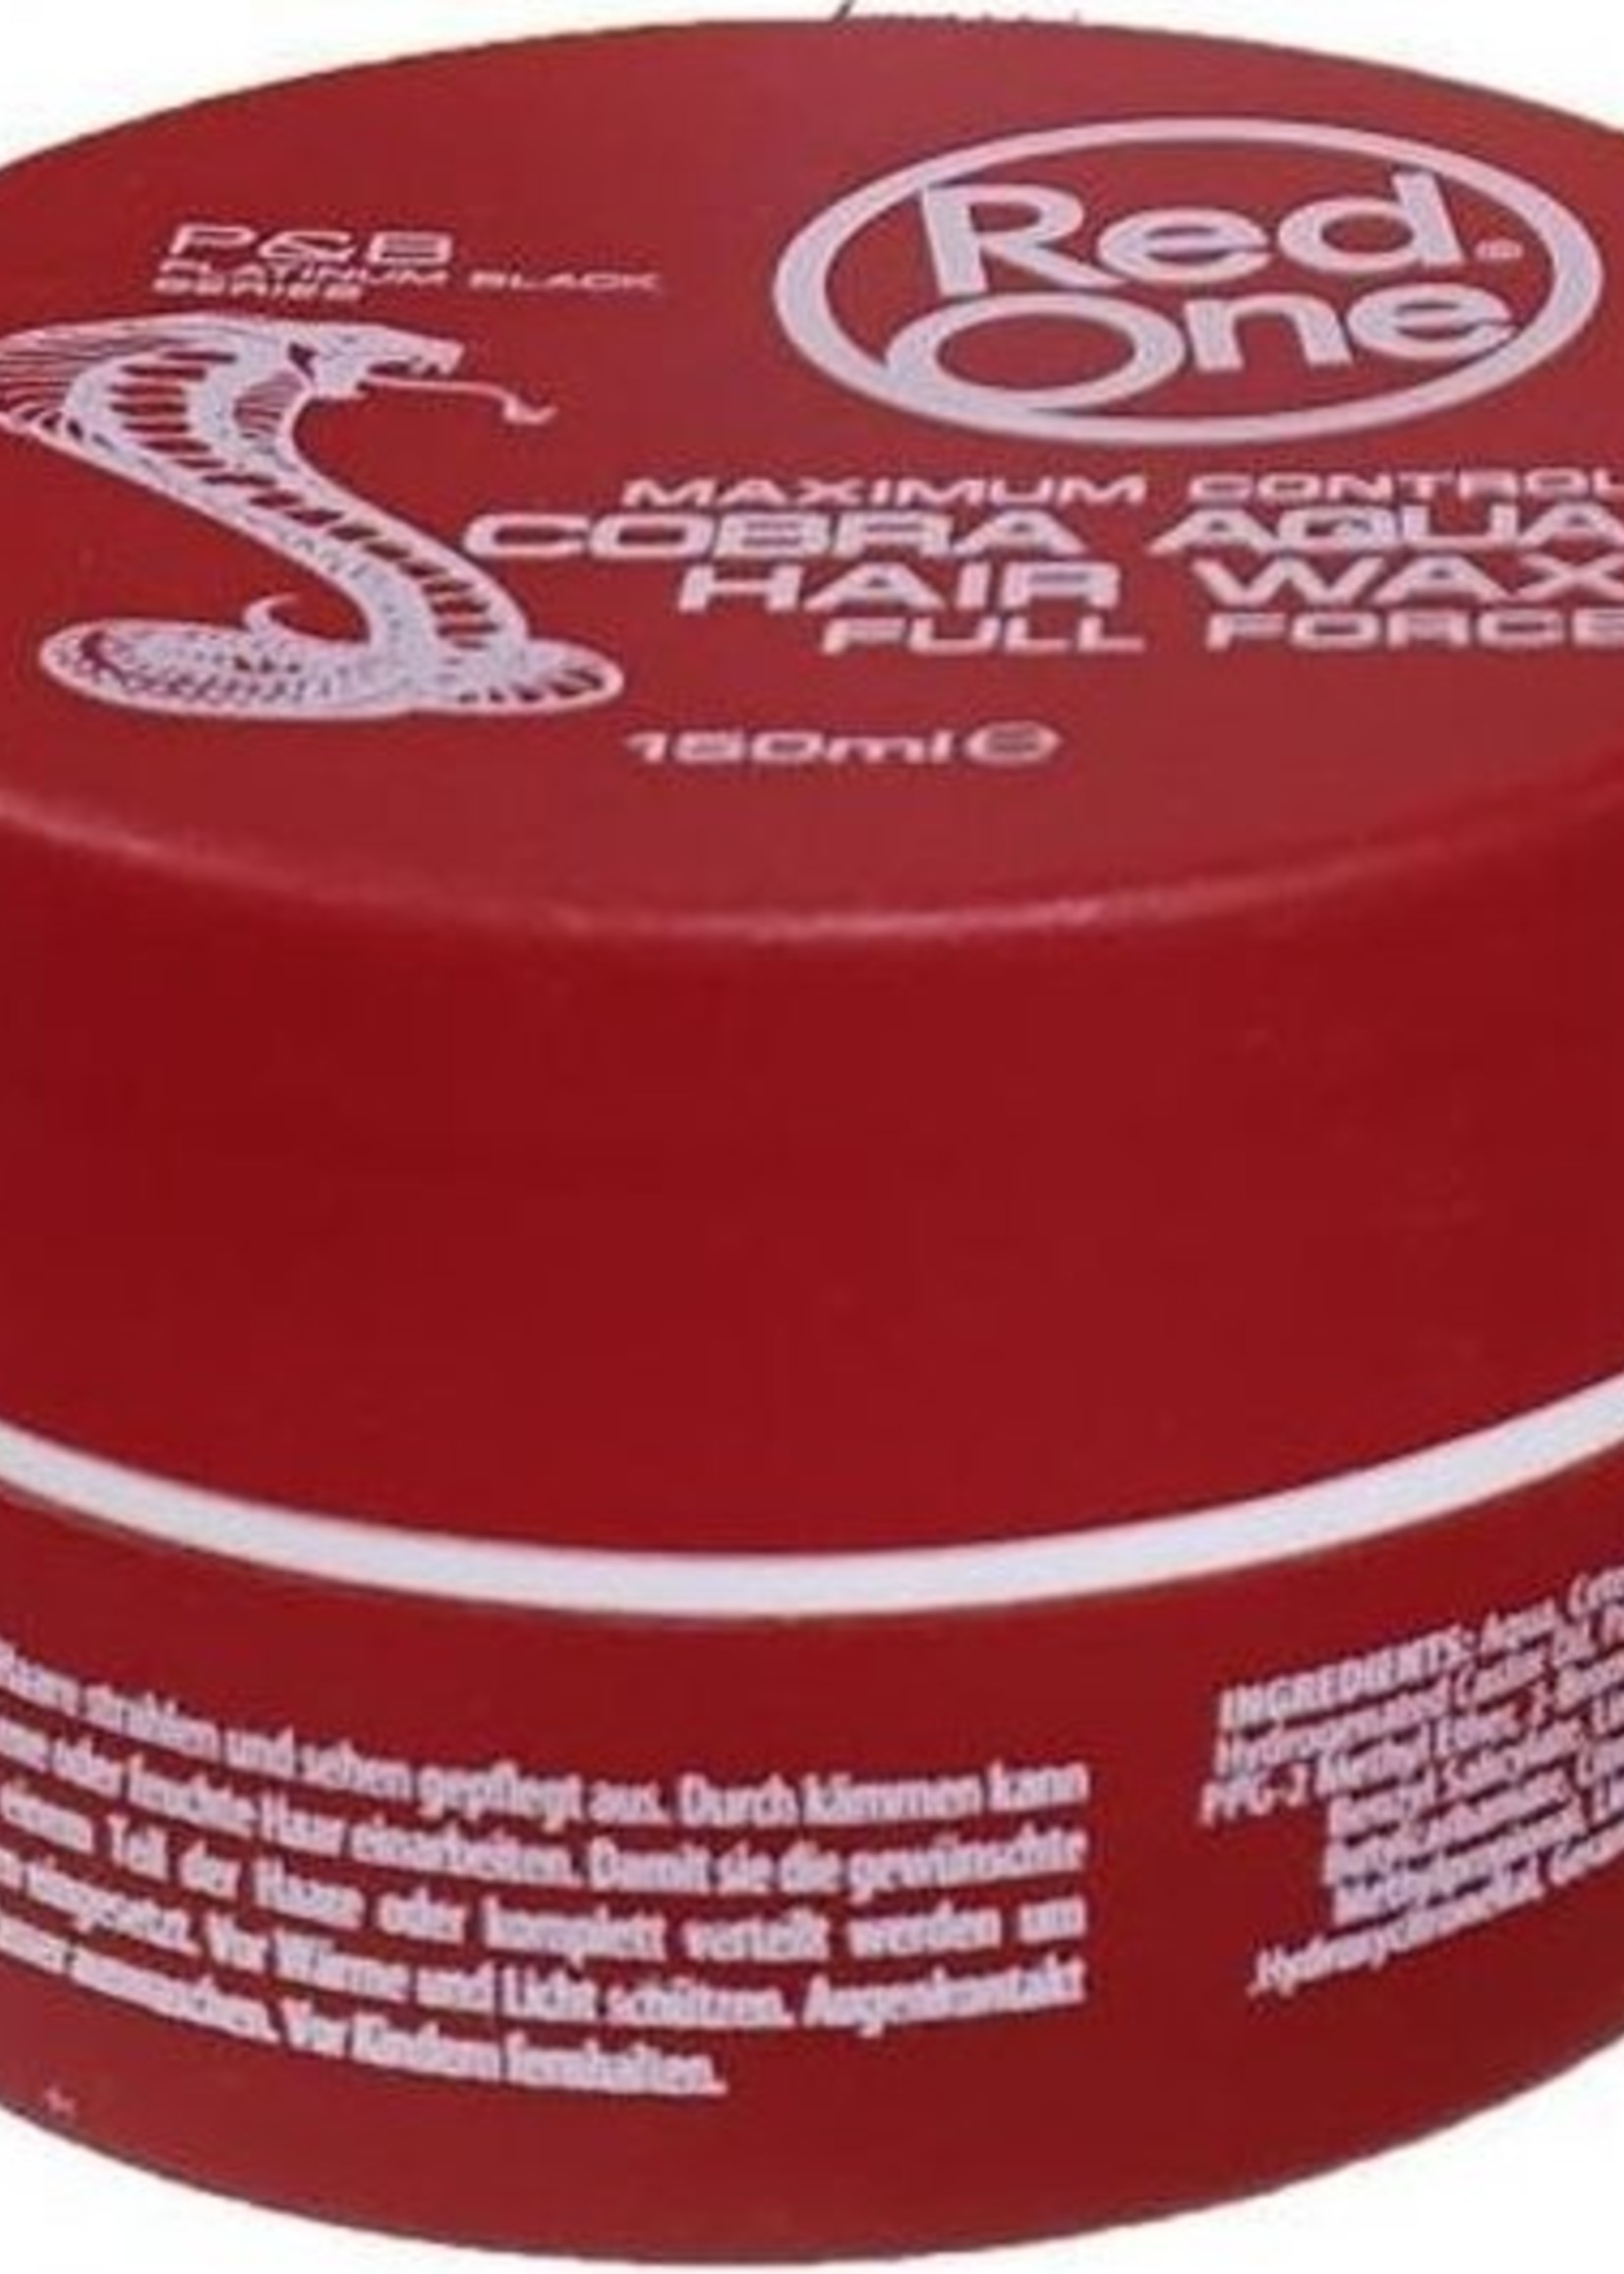 Red One  RedOne Haarwax – Aqua Hair Wax Cobra